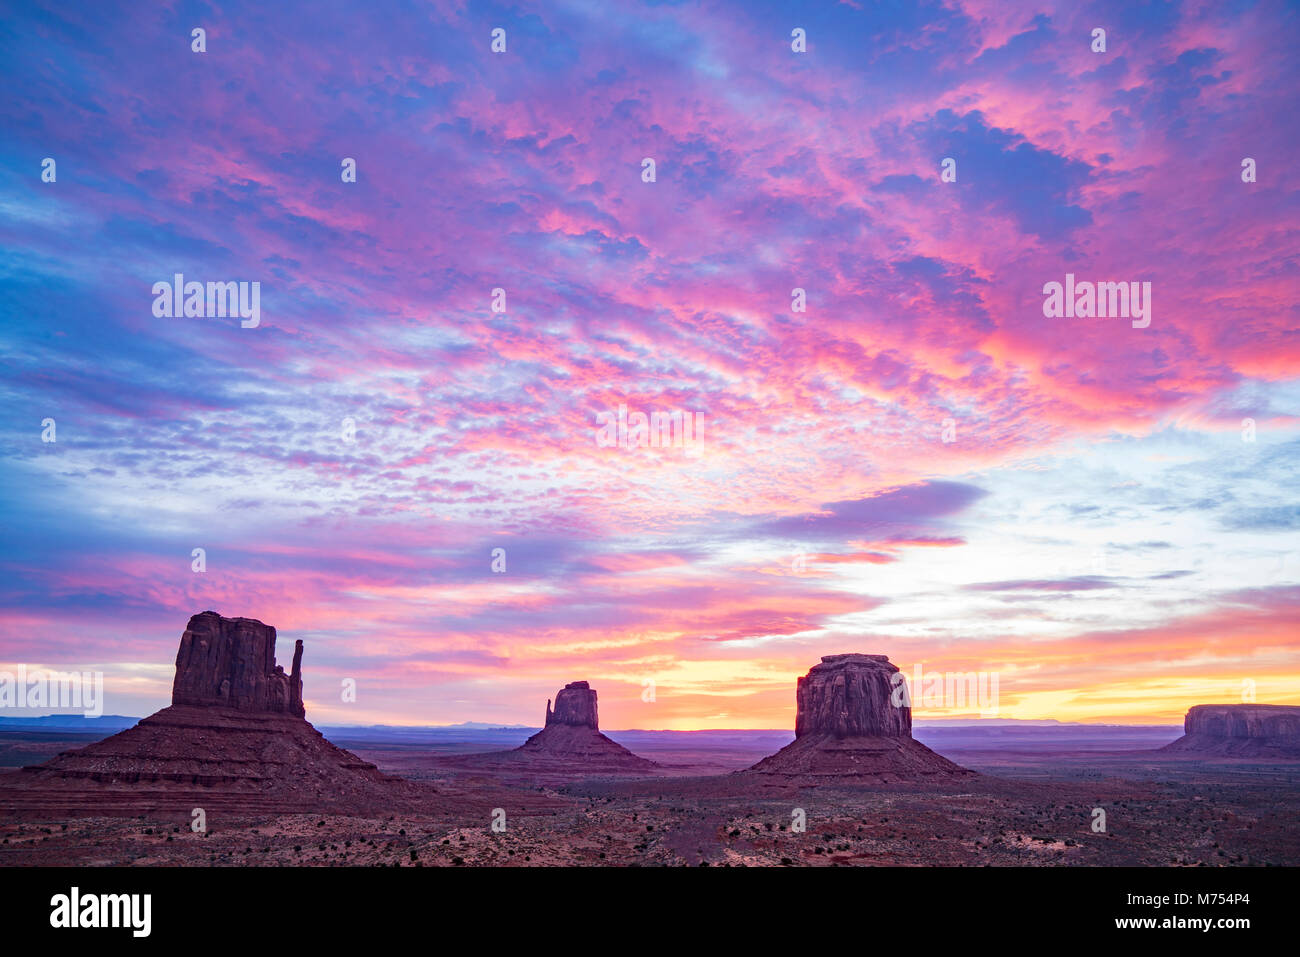 The Mittens at sunrise, Monument Valley Tribal Park, Arizona/Utah Stock Photo